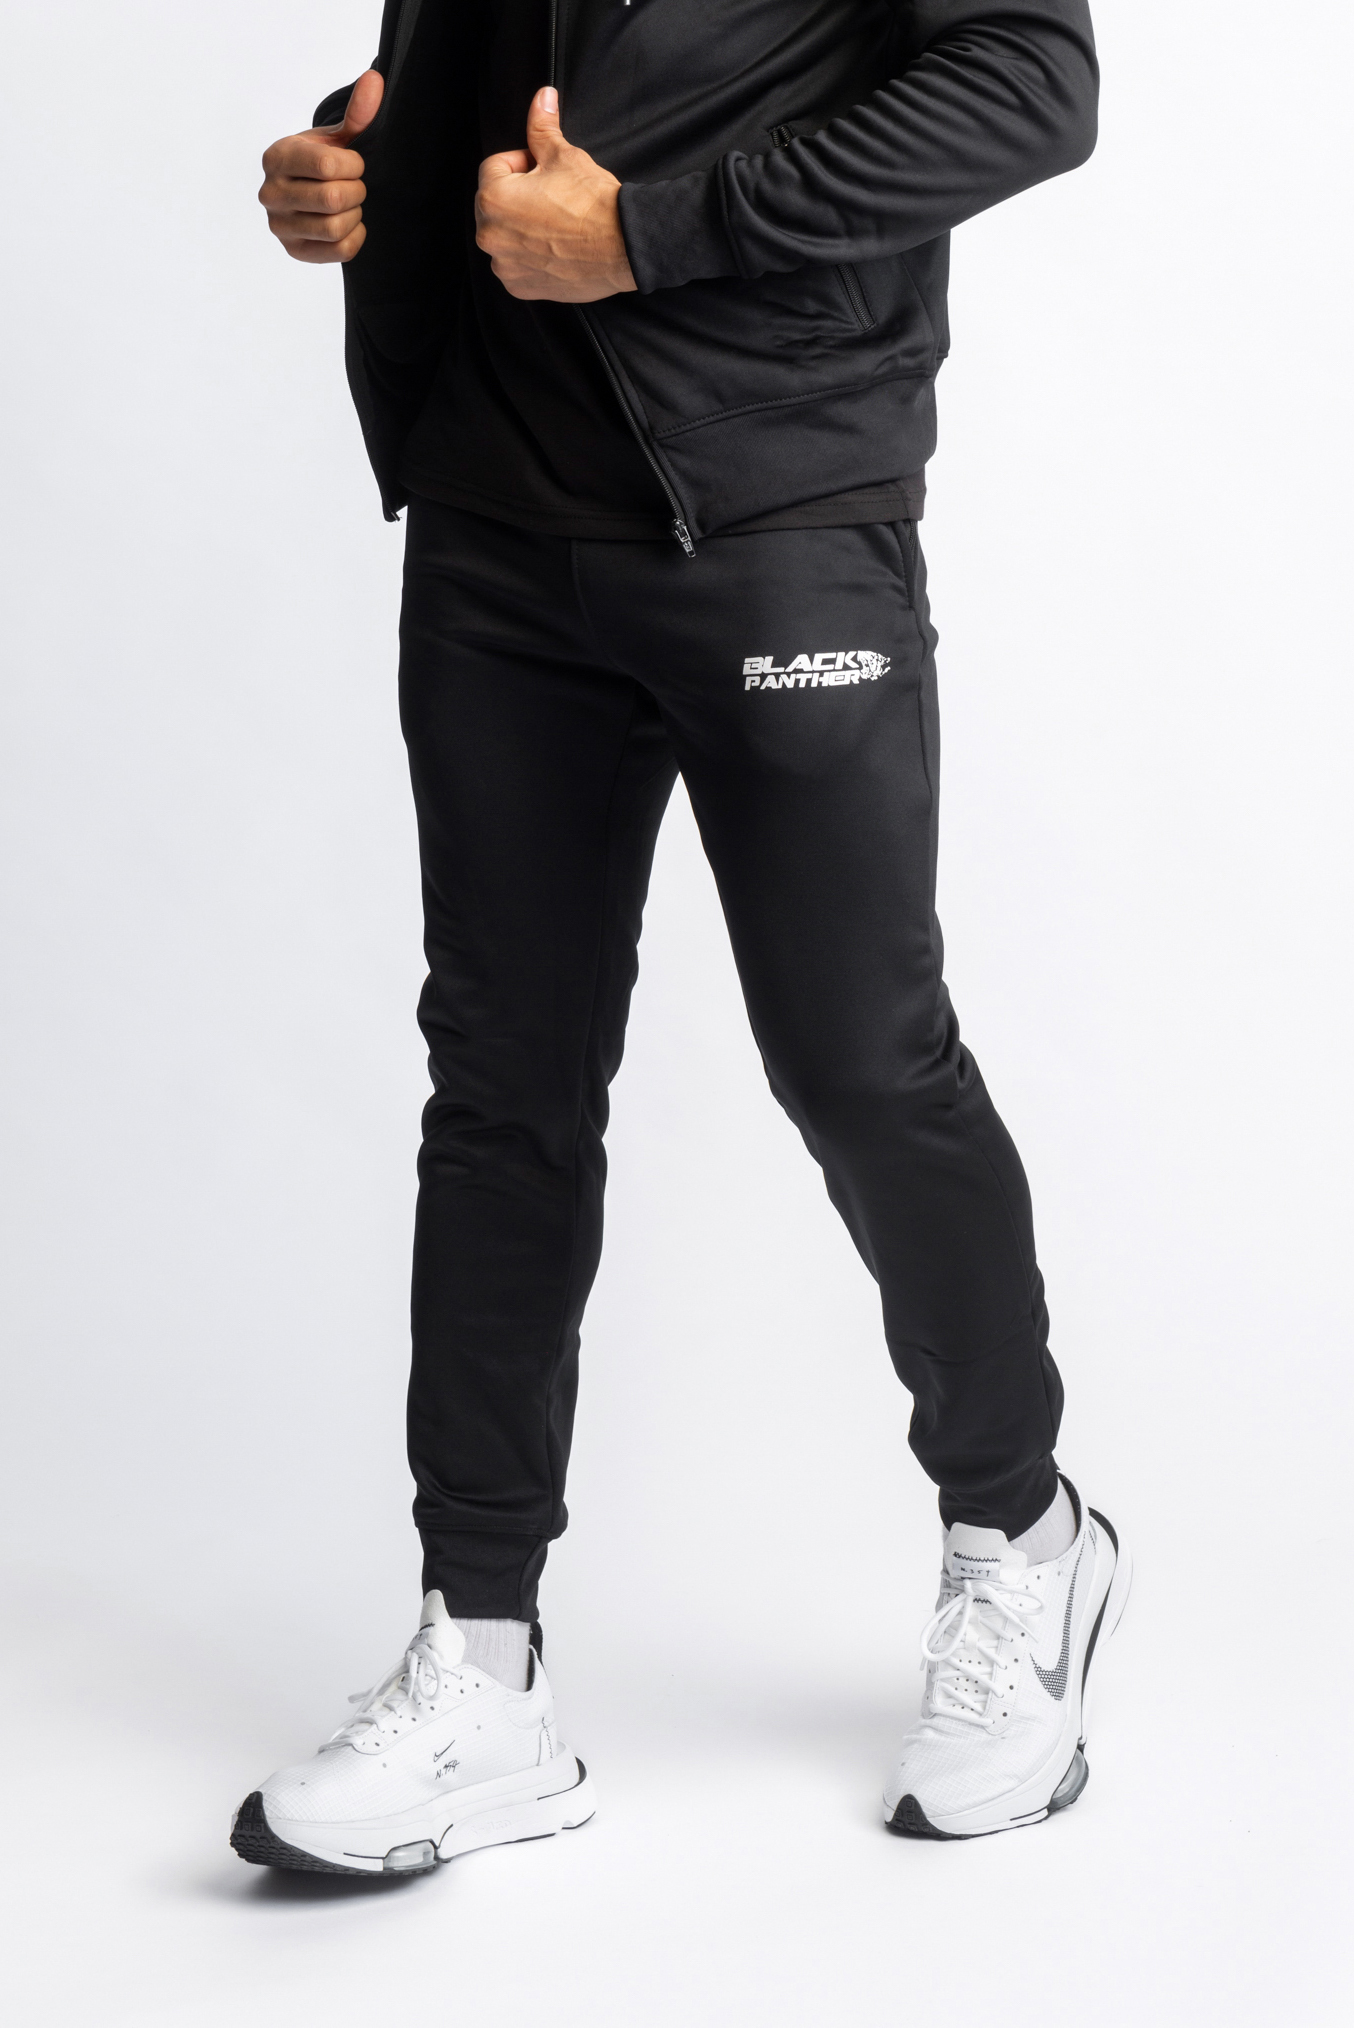 Buy BLACK PANTHER Black Solid Polyester Regular Fit Men's Track Pants |  Shoppers Stop